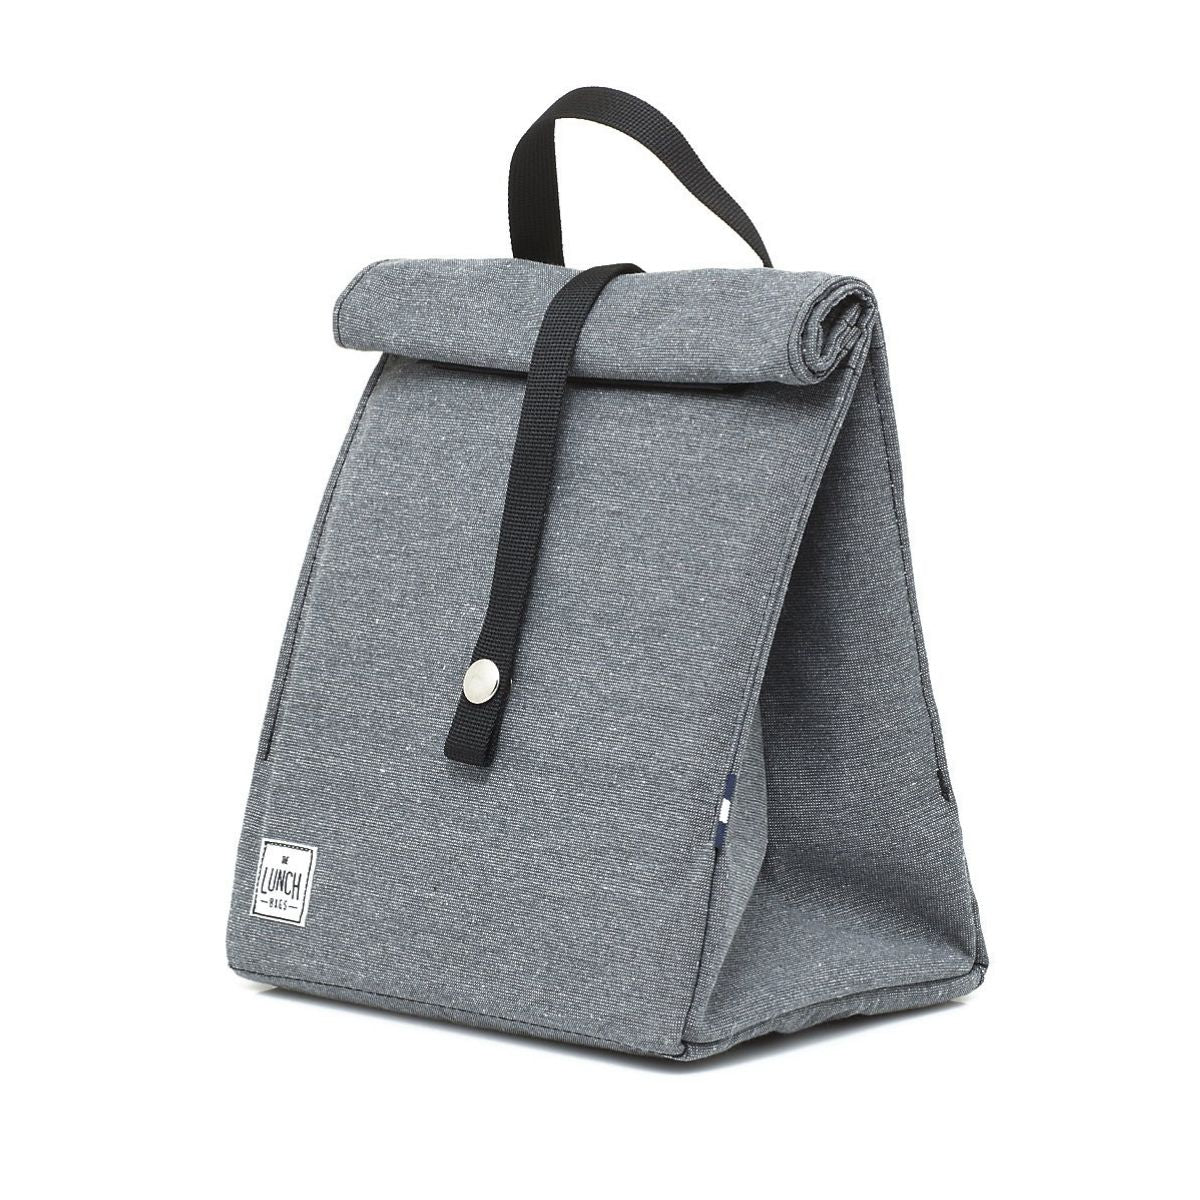 The Lunch Bags Original Ισοθερμική Τσάντα Stone Grey - 5lt